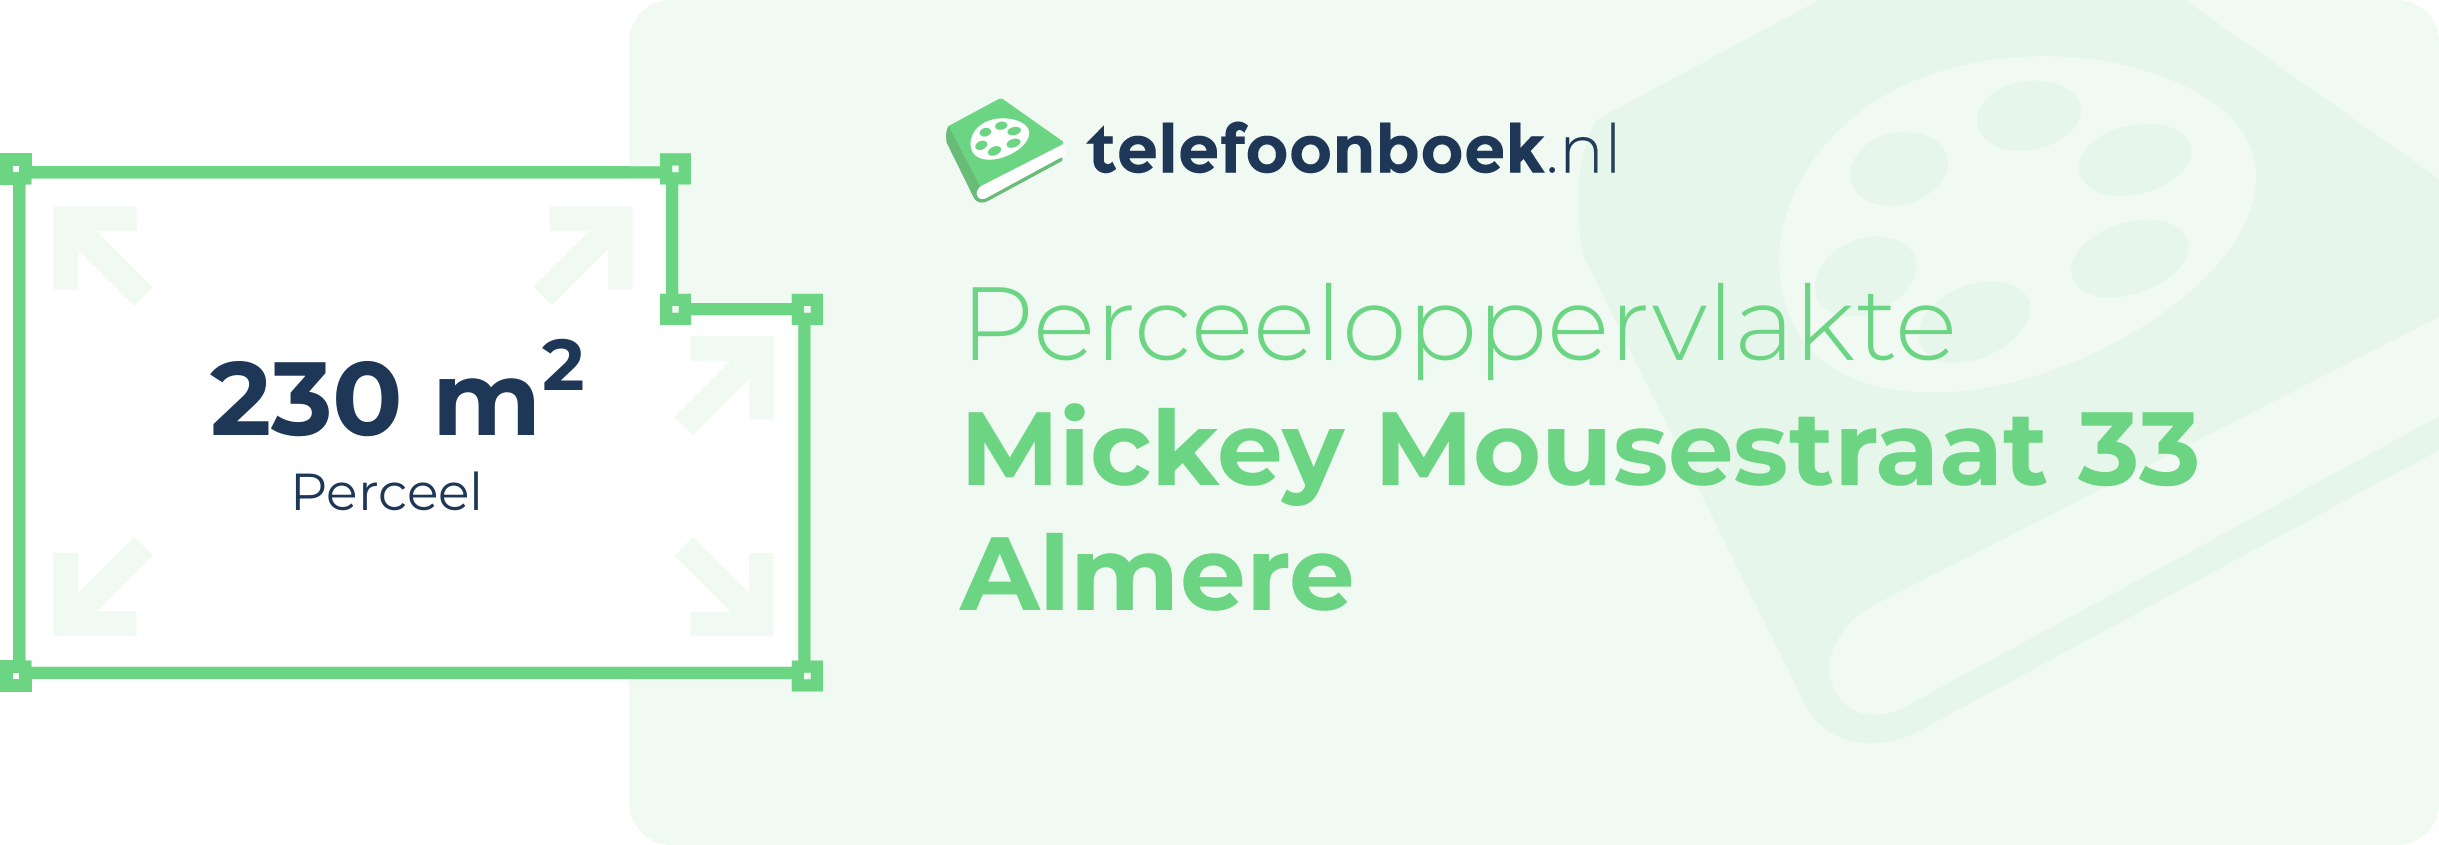 Perceeloppervlakte Mickey Mousestraat 33 Almere